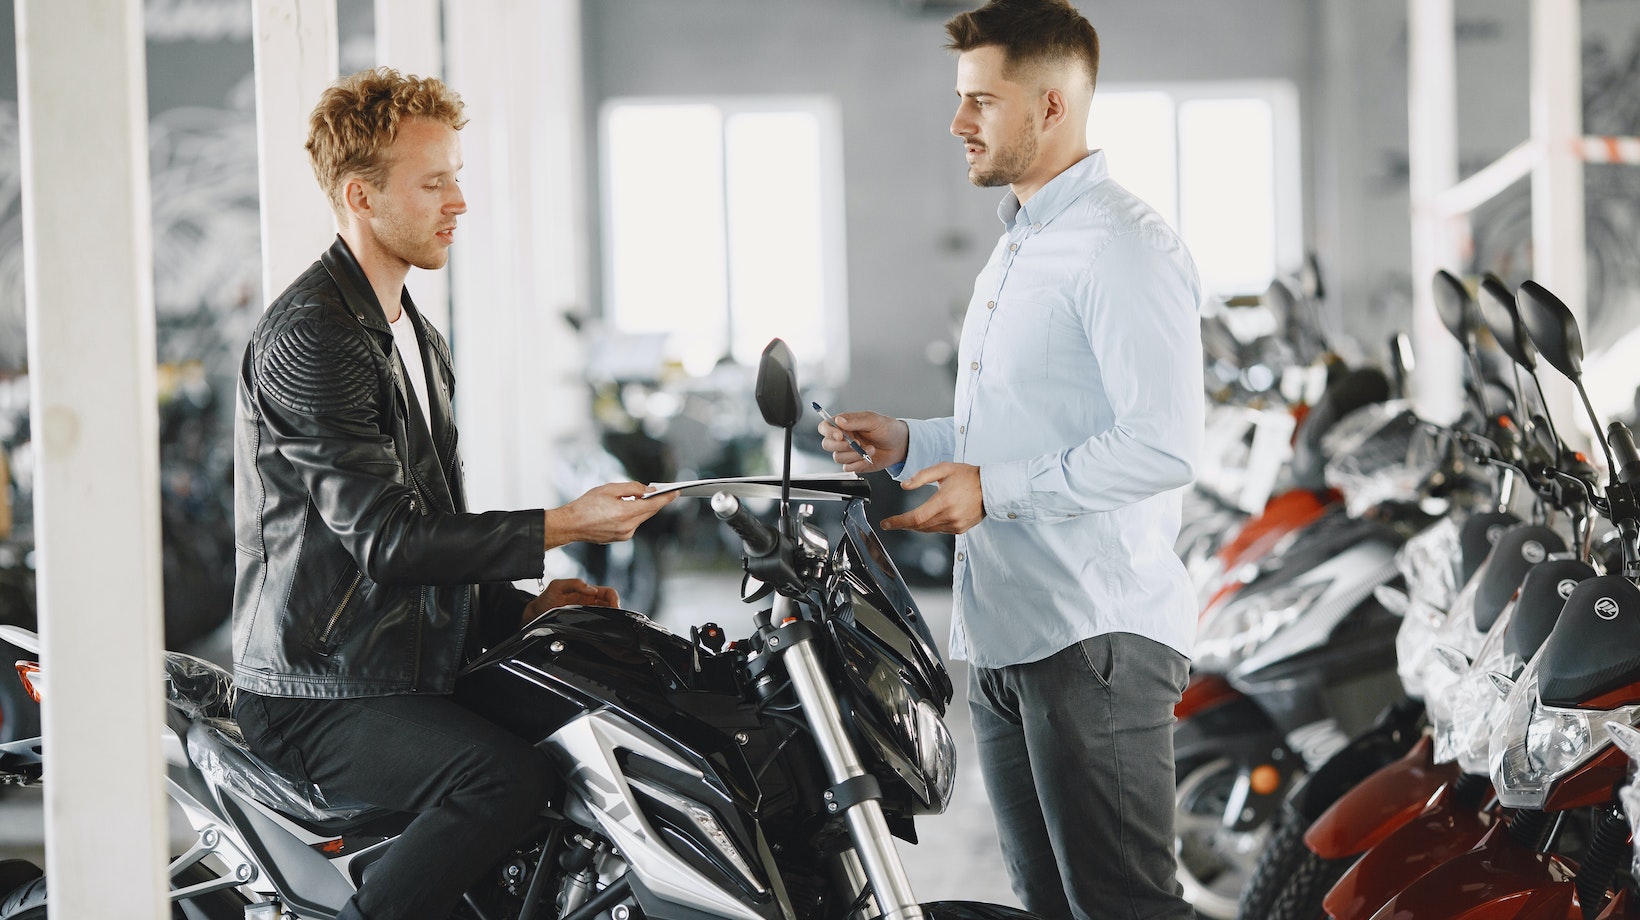 honda motorcycle dealers in michigan